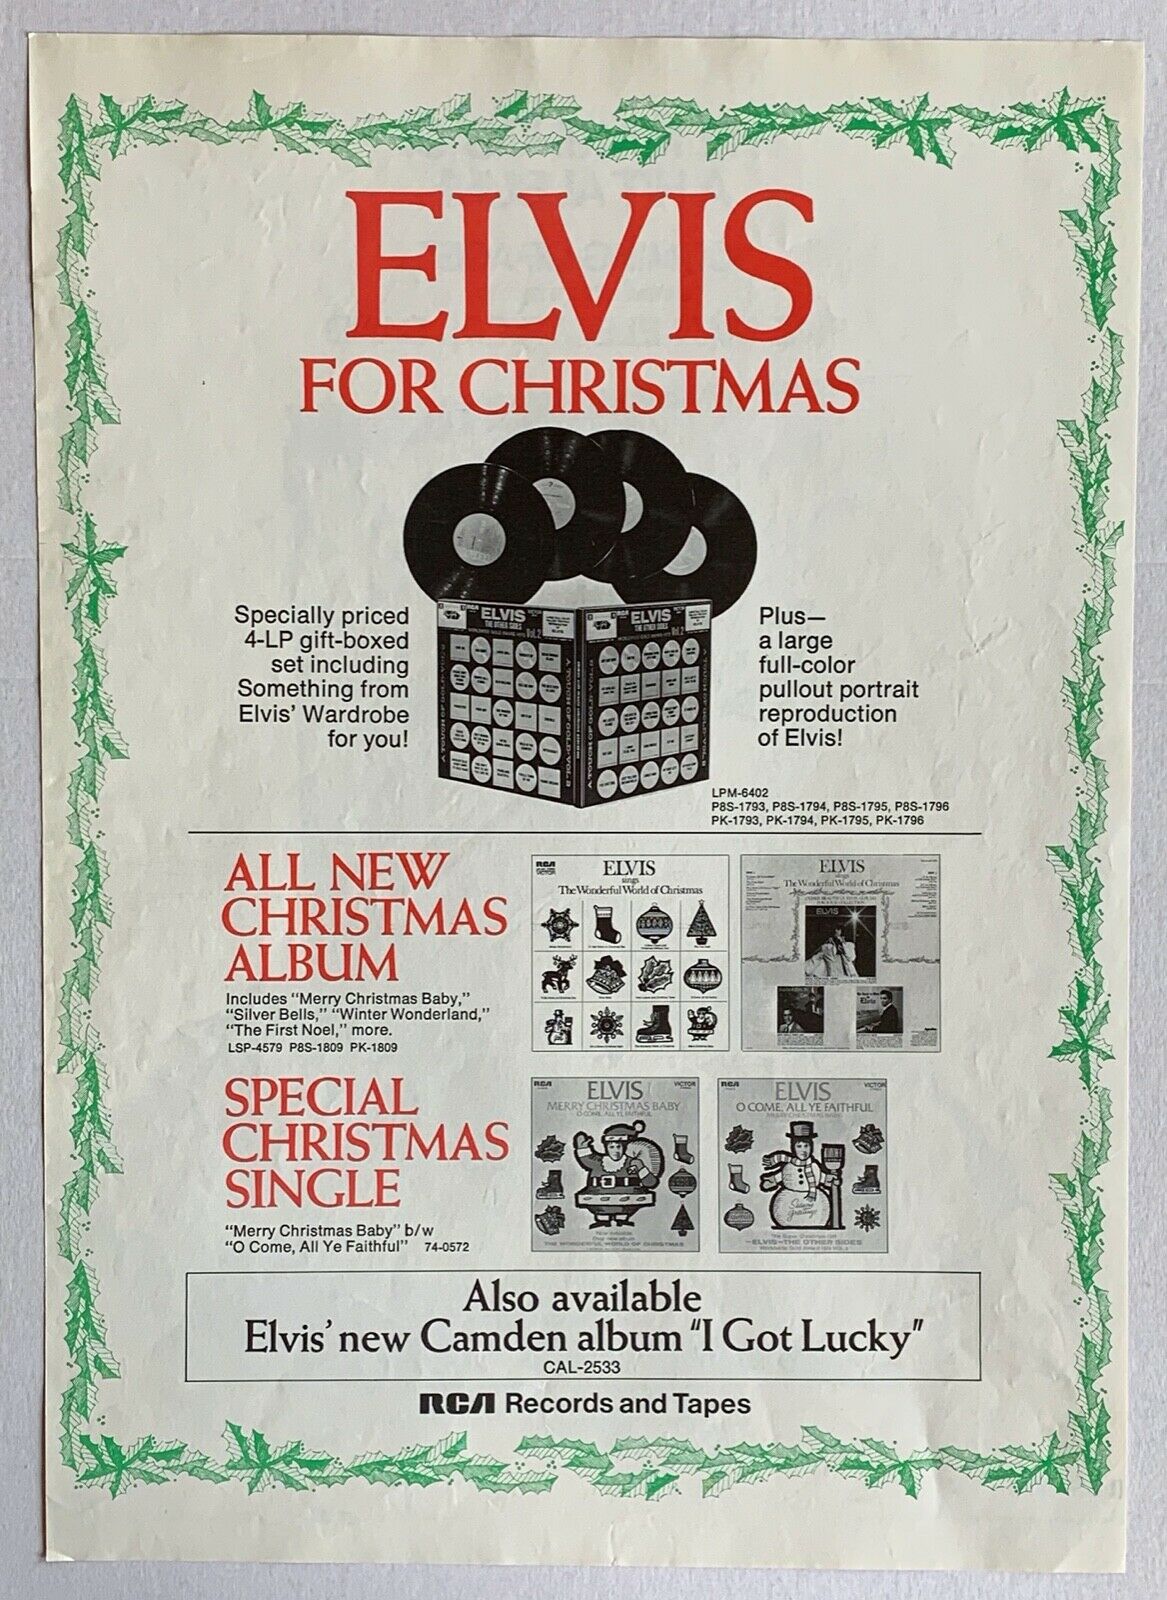 Elvis Presley Vintage 1971 Poster Advert For Christmas